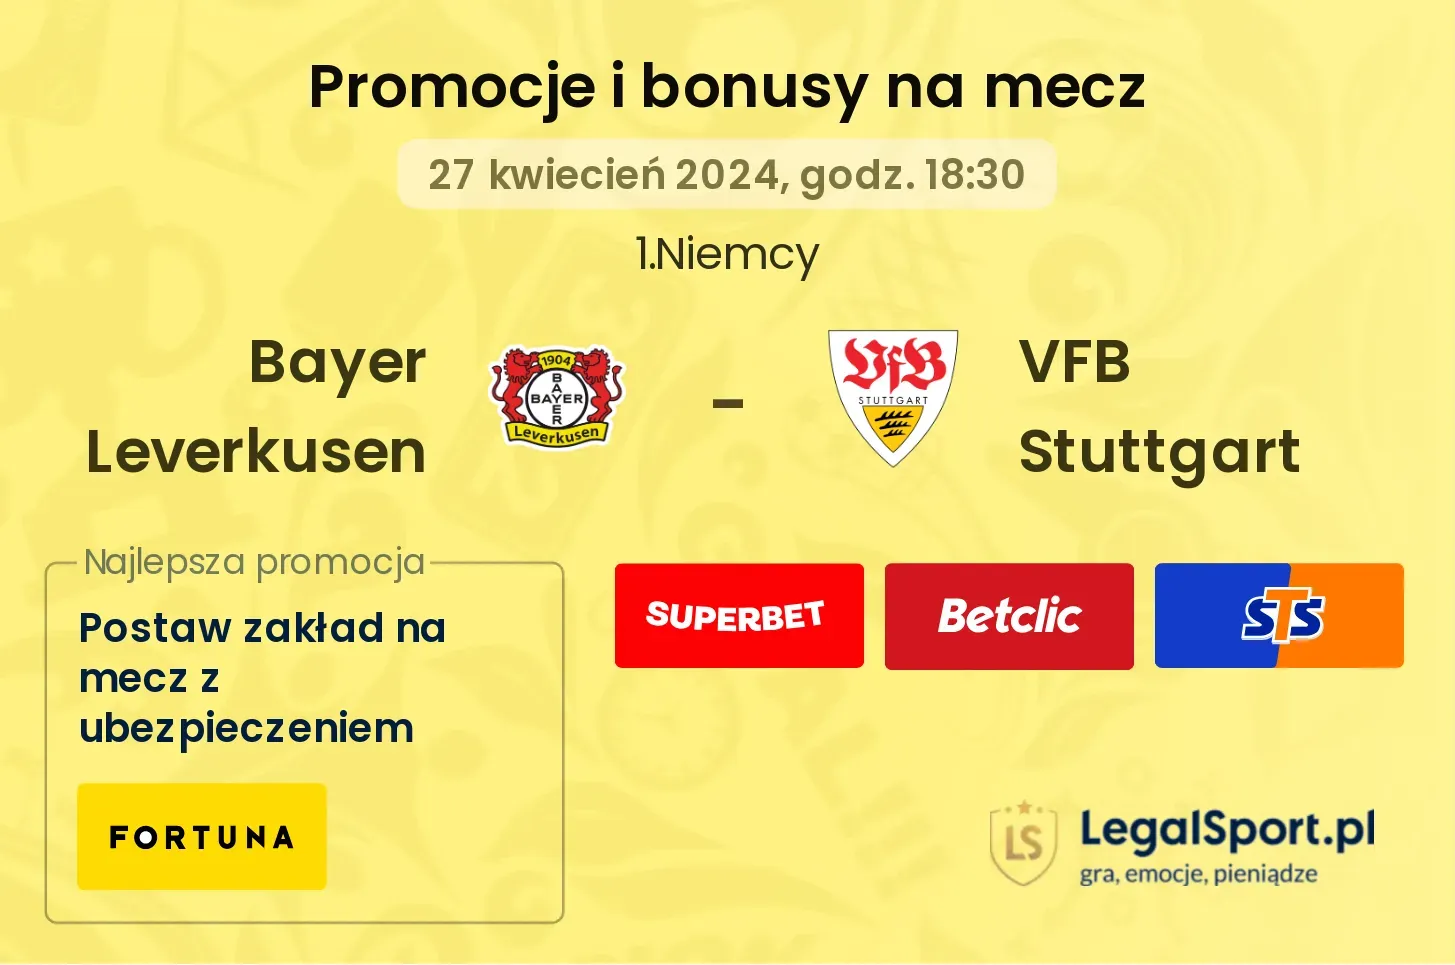 Bayer Leverkusen - VFB Stuttgart promocje bonusy na mecz